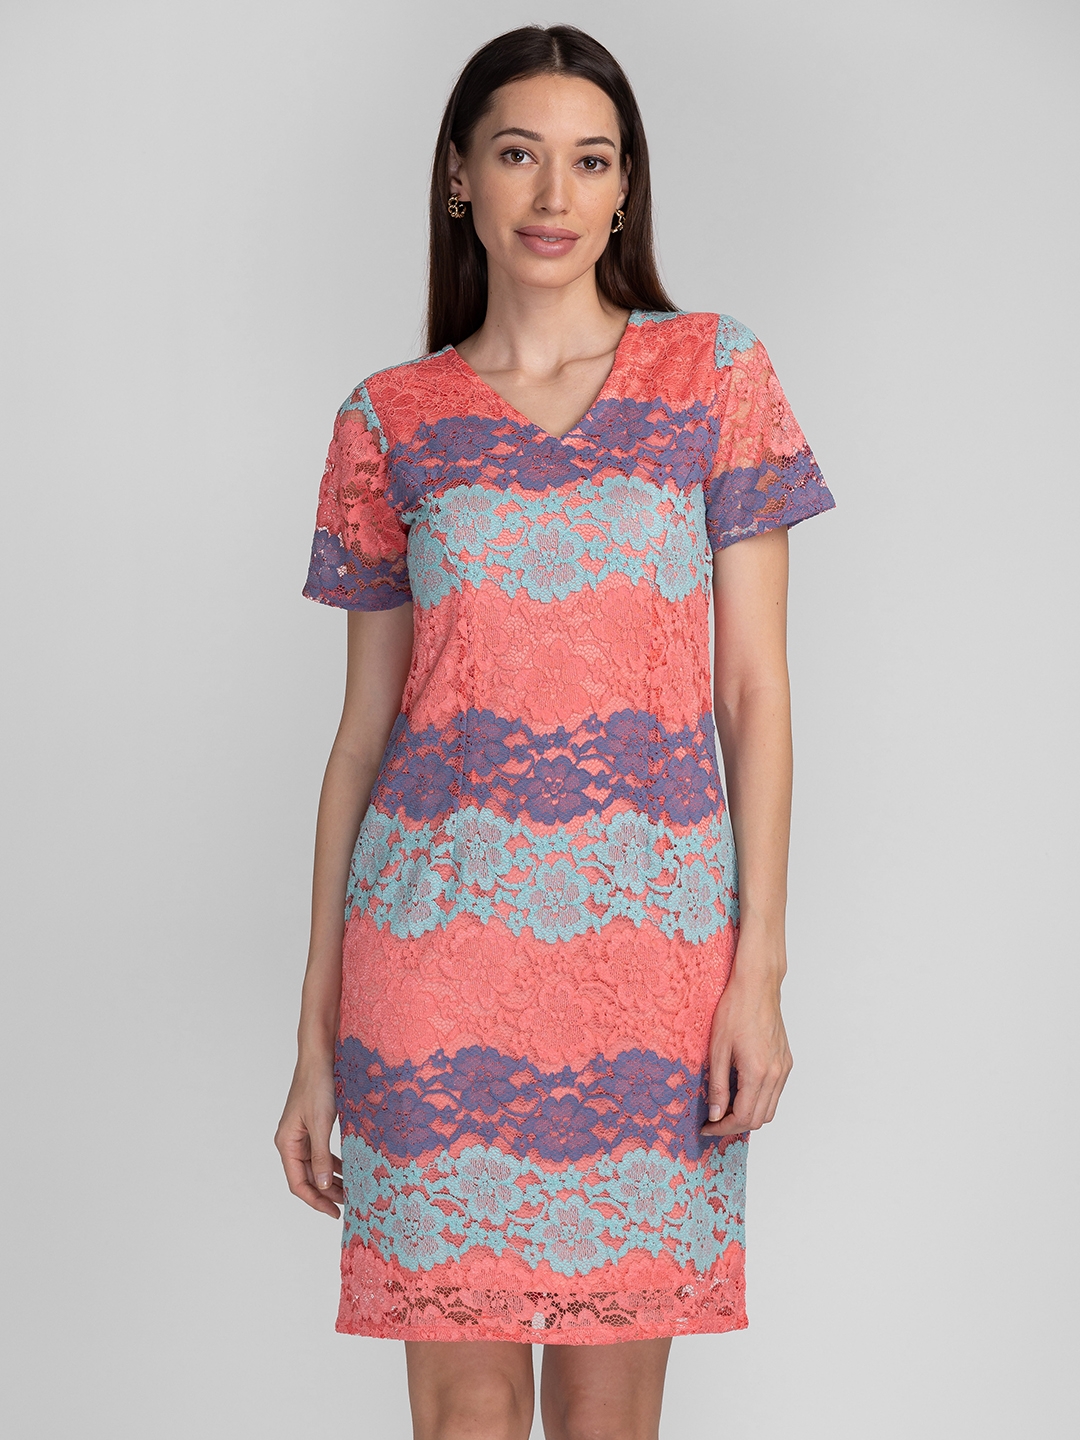 globus | Globus Coral Self Design A-Line Lace Dress